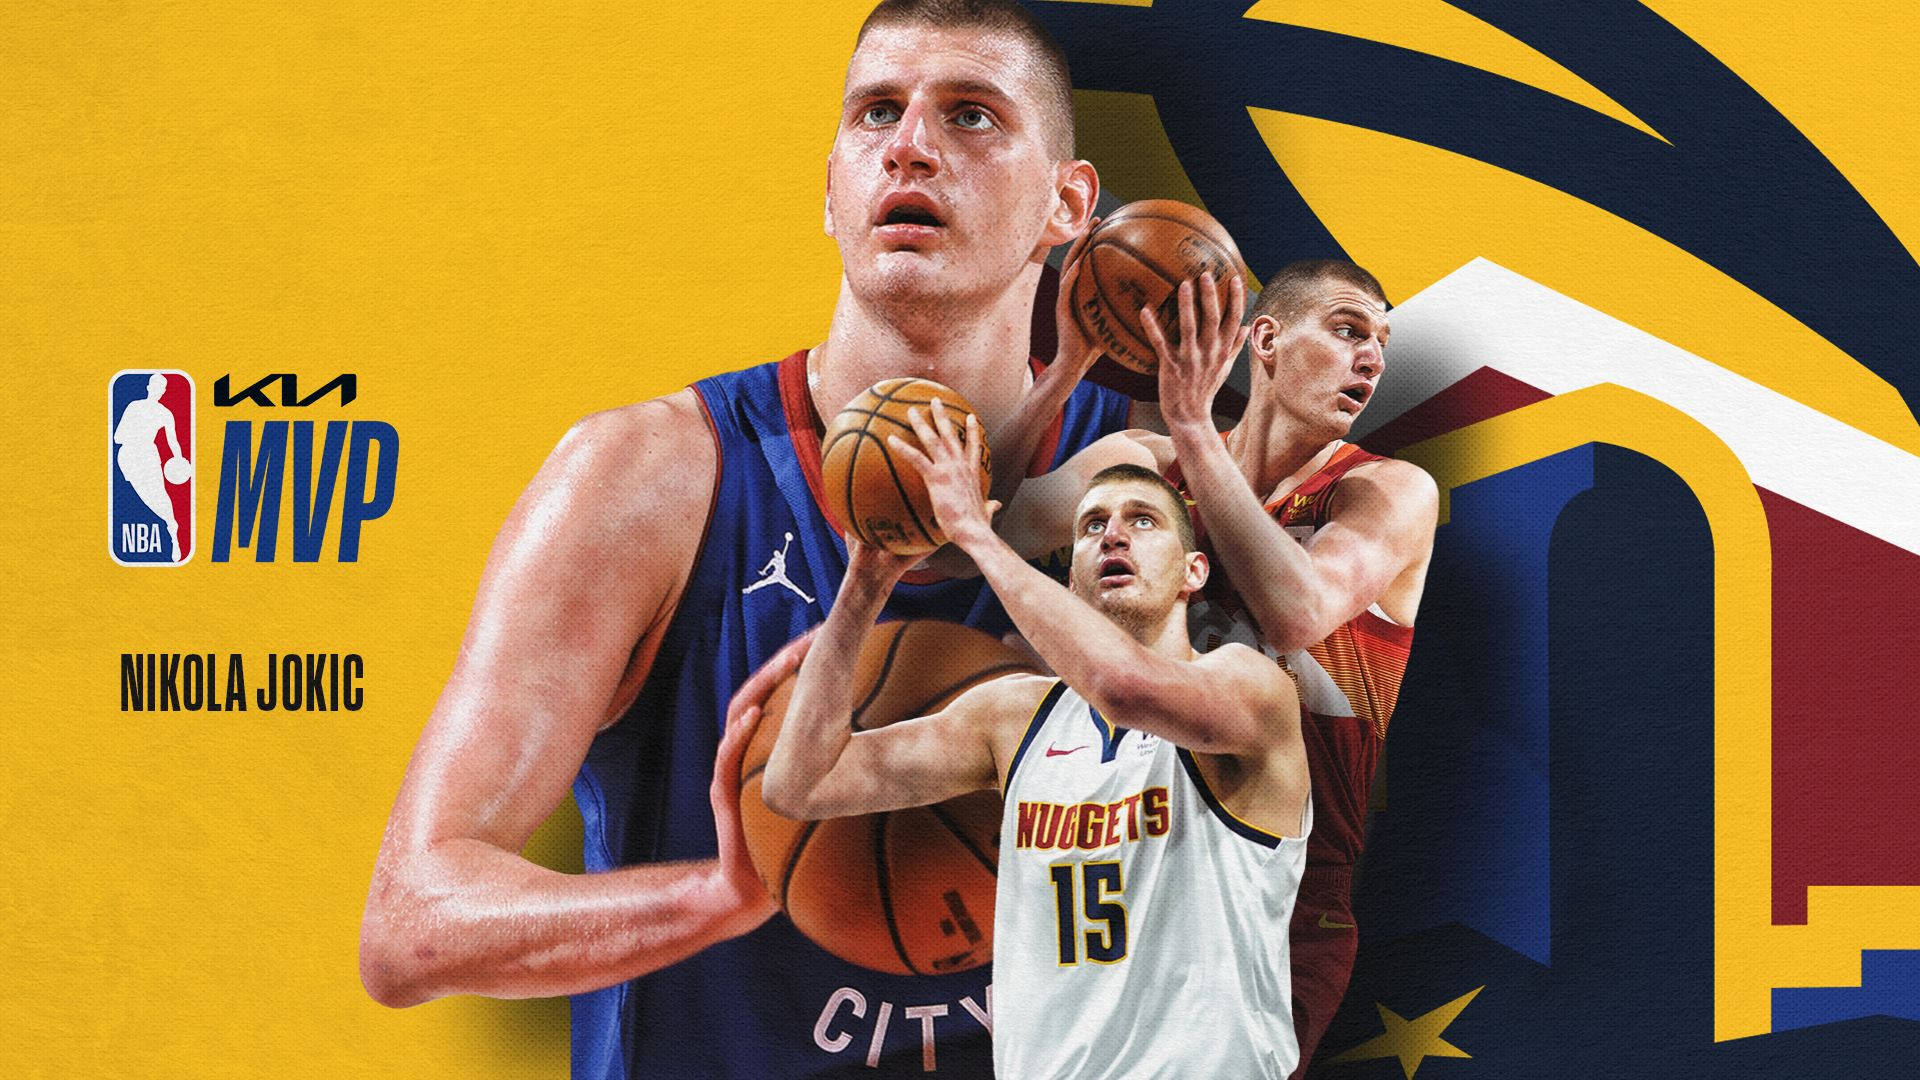 Nikola Jokic NBA MVP Wallpaper